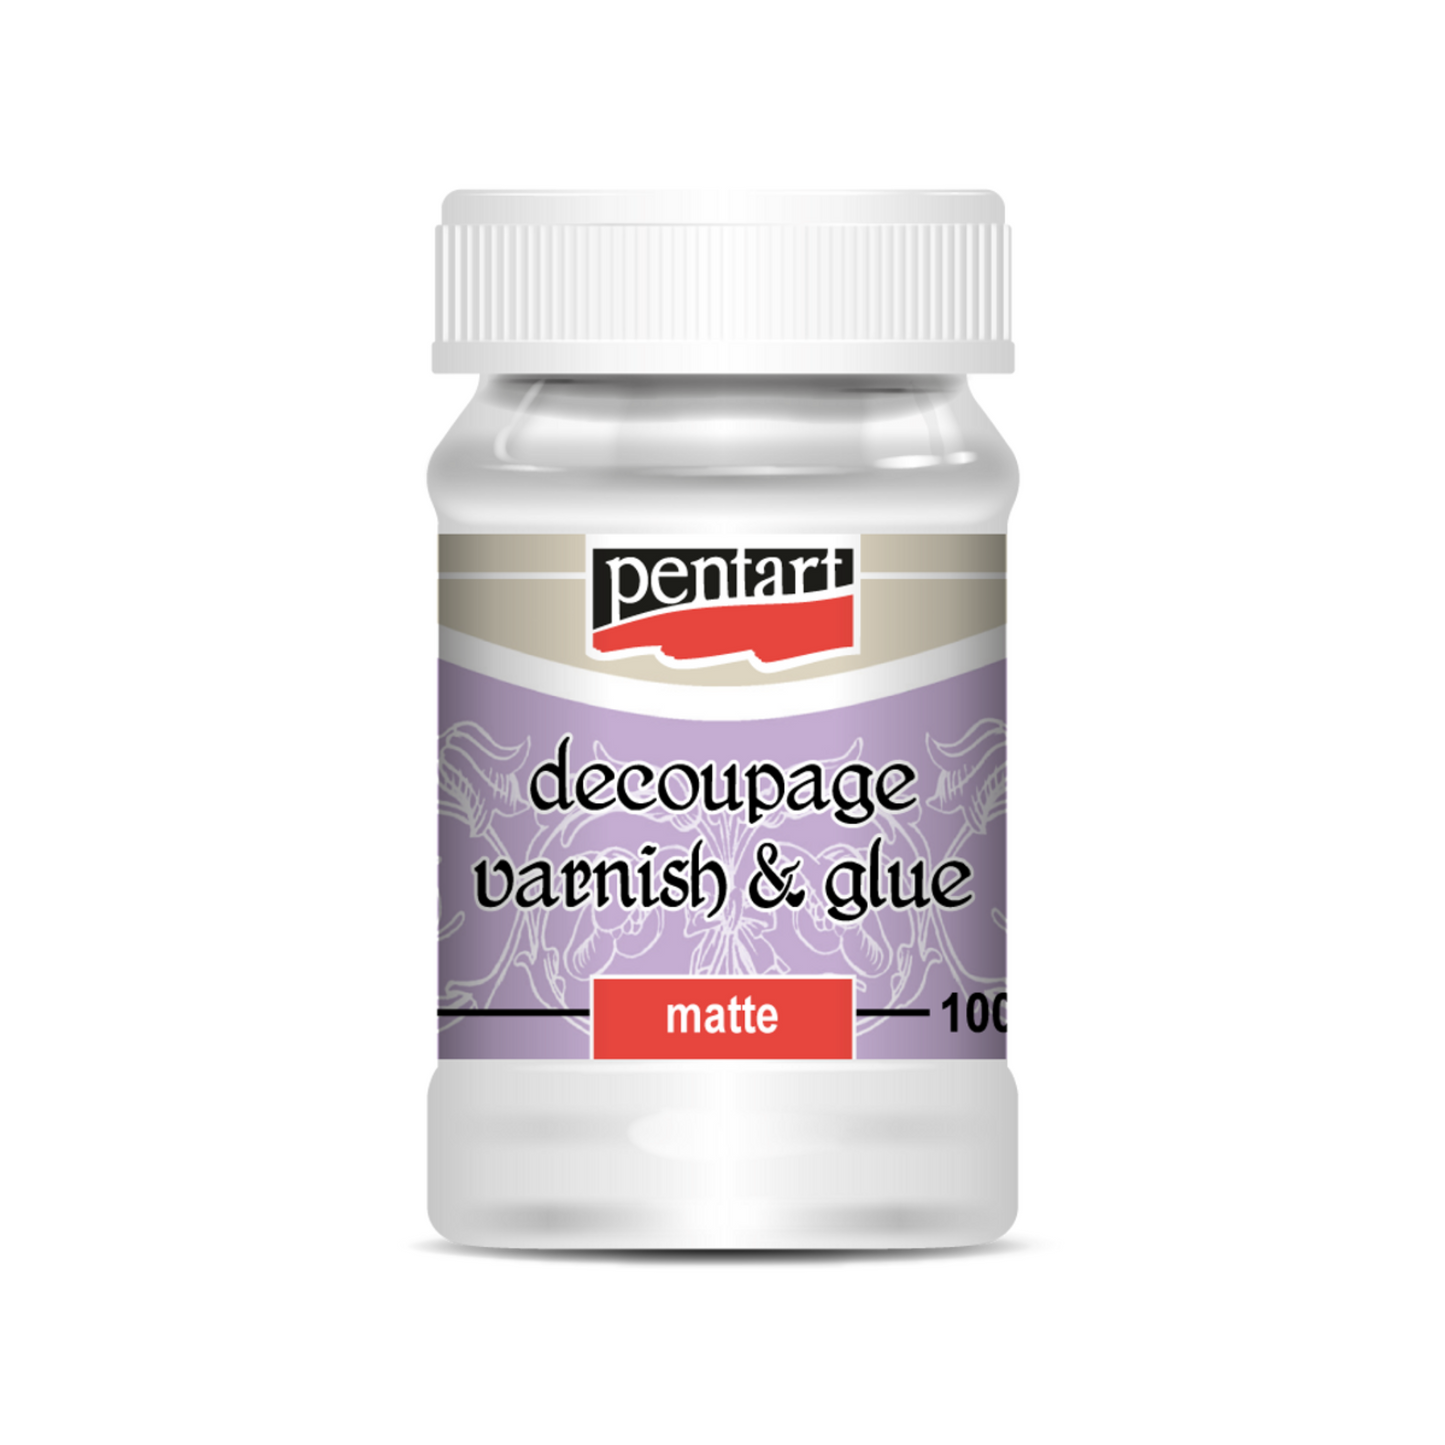 Decoupage Varnish & Glue - Matte by Pentart